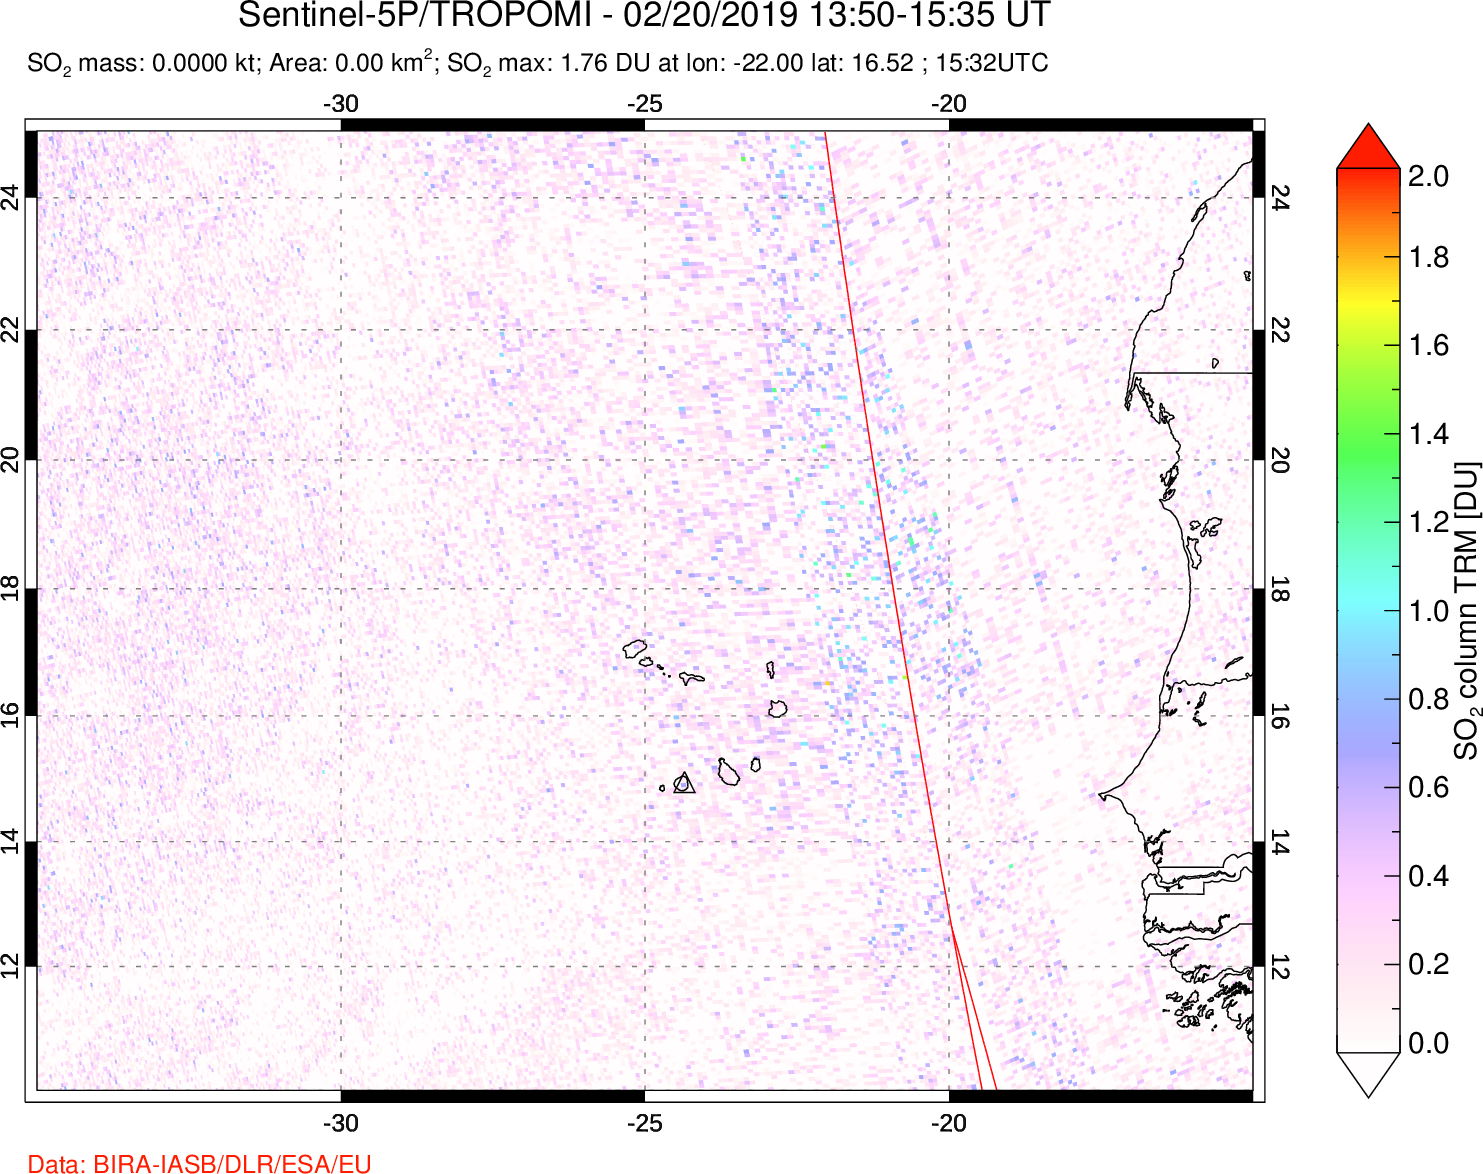 A sulfur dioxide image over Cape Verde Islands on Feb 20, 2019.